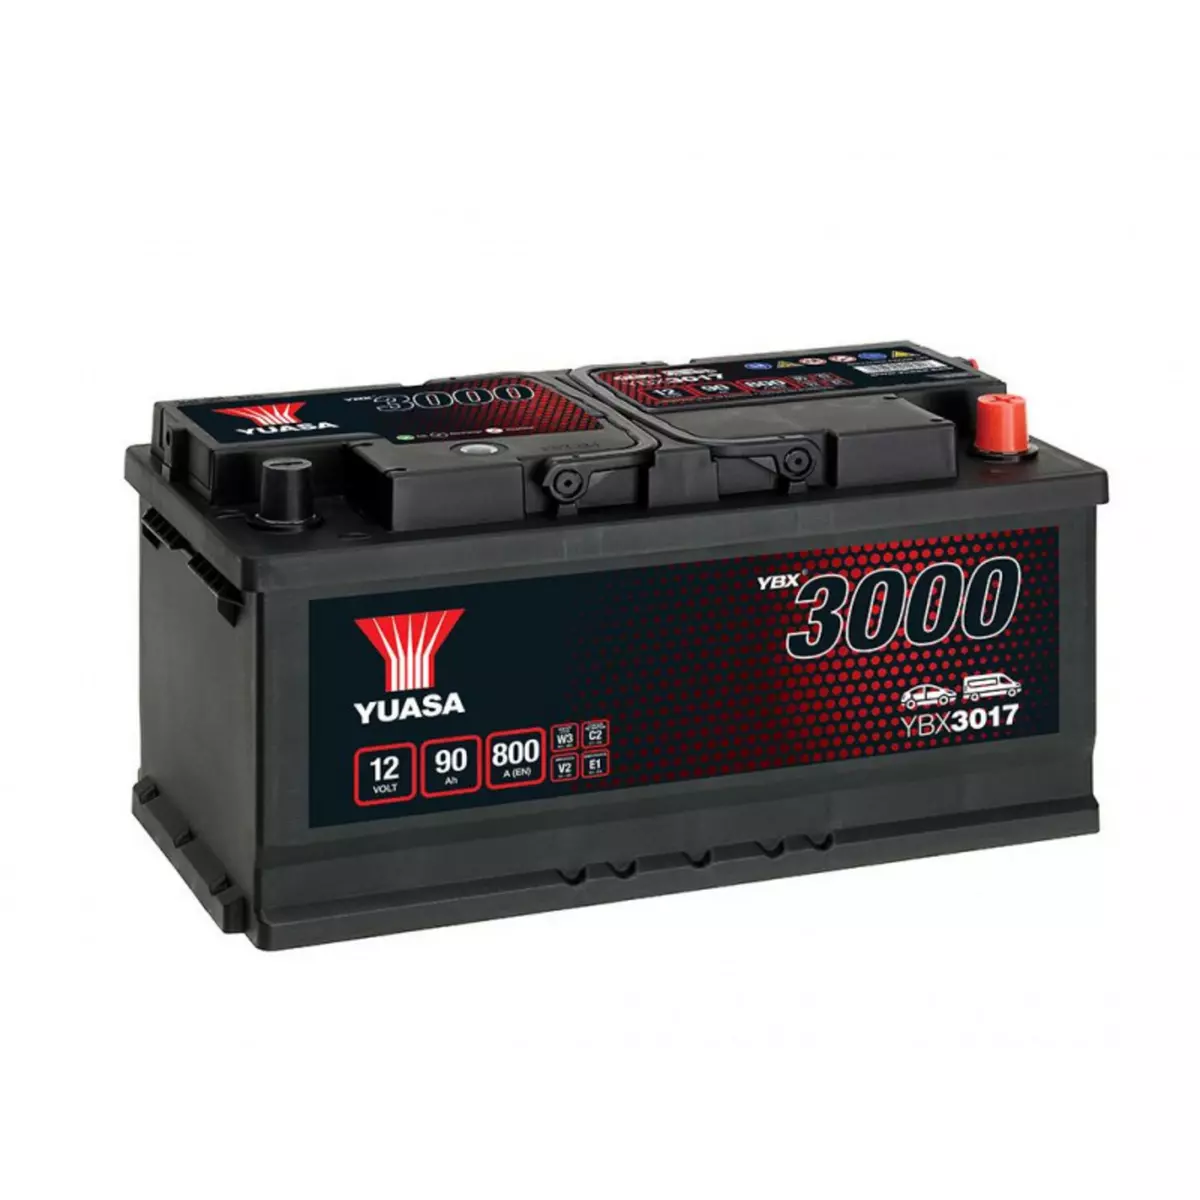 YUASA Batterie Yuasa SMF YBX3017 12V 90ah 800A